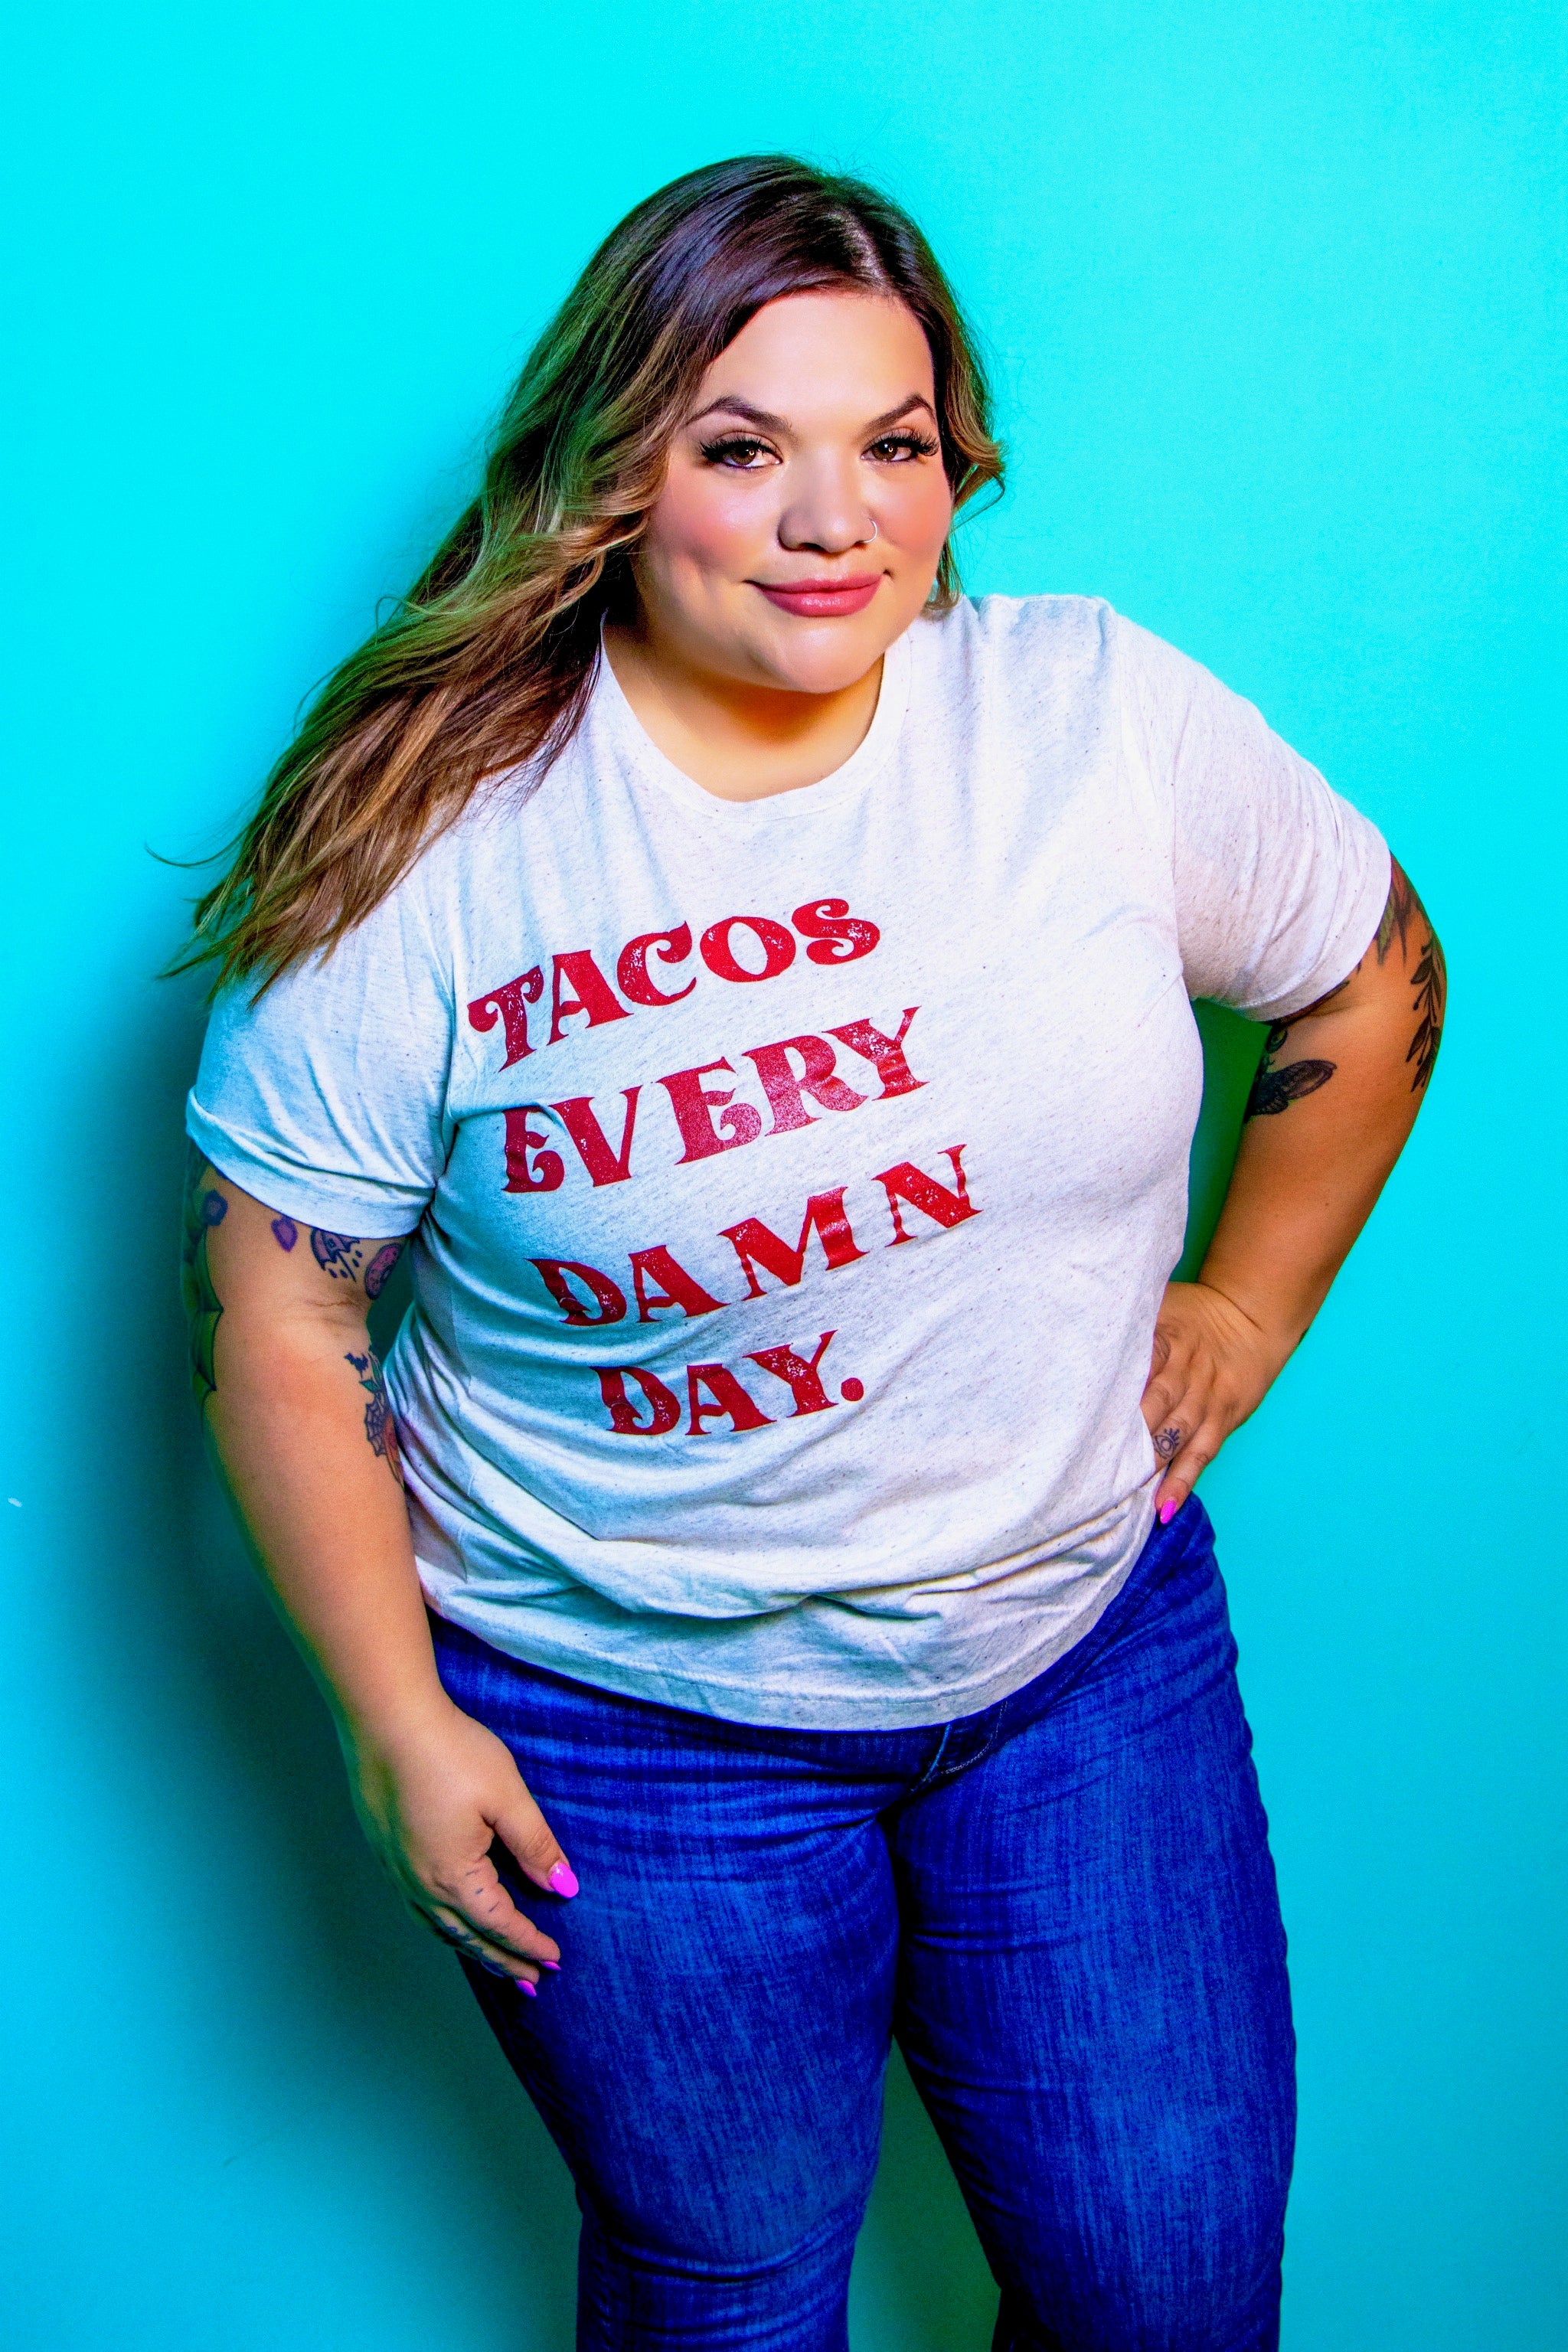 Tacos Every Damn Day